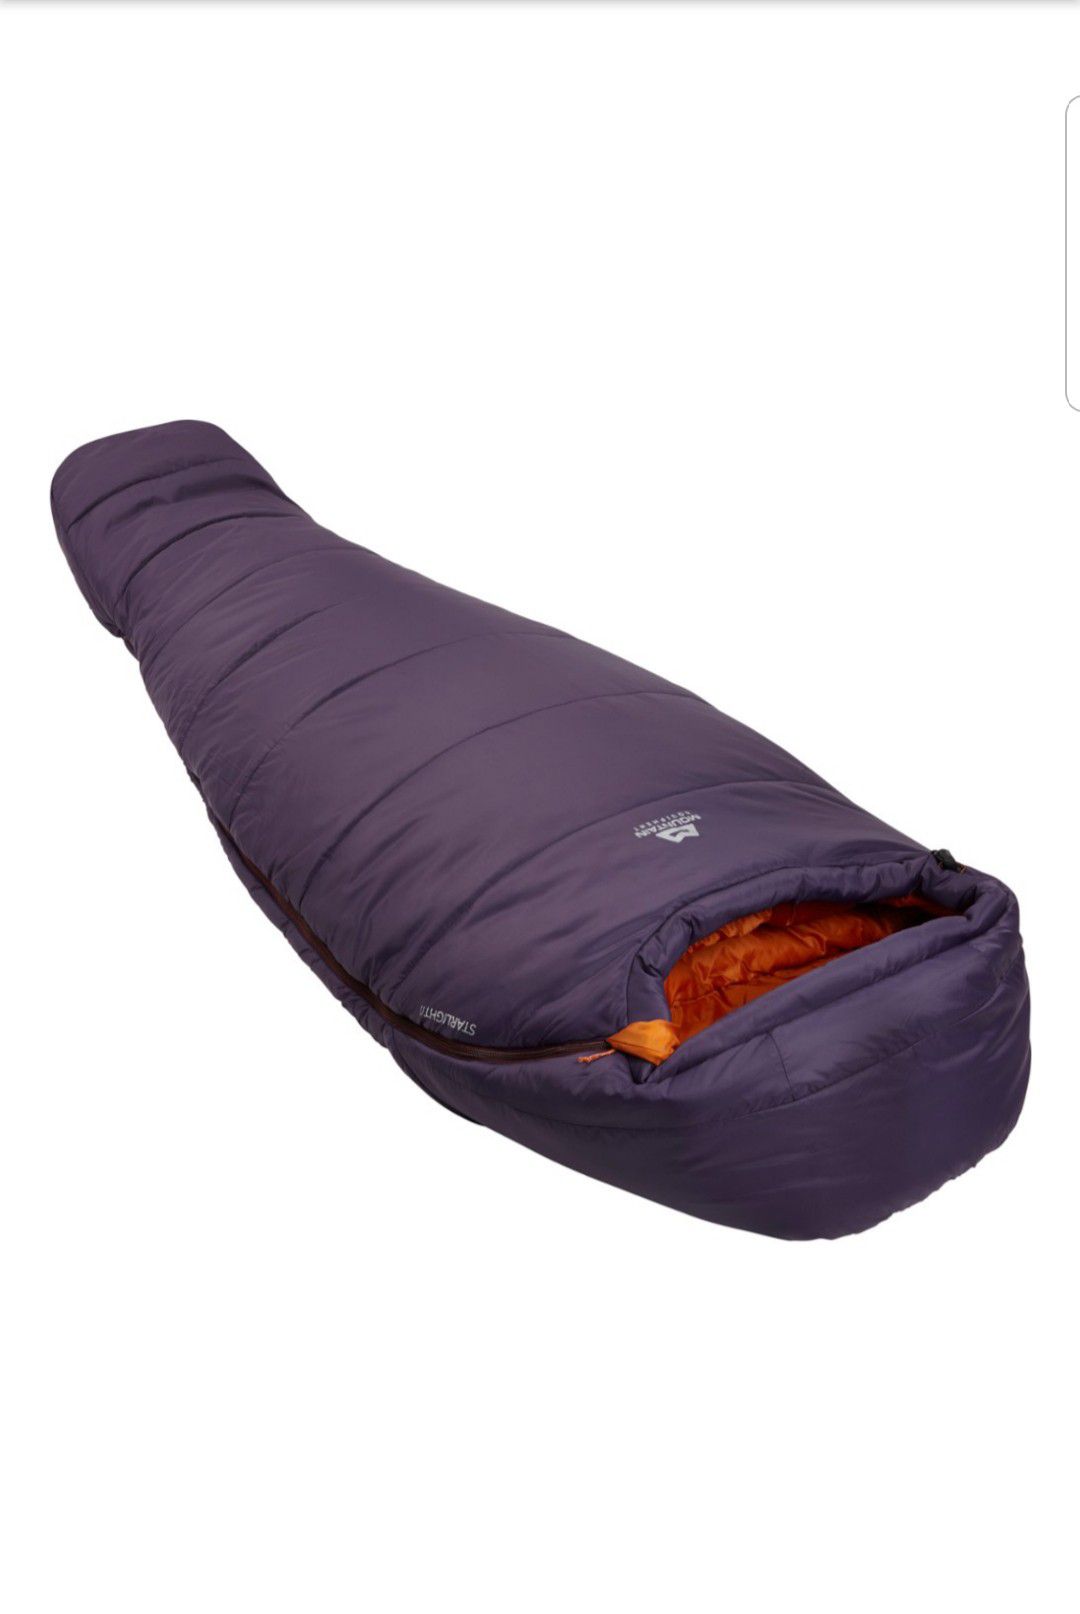 Women's Sleeping Bag - Mountain Equipment Starlight II